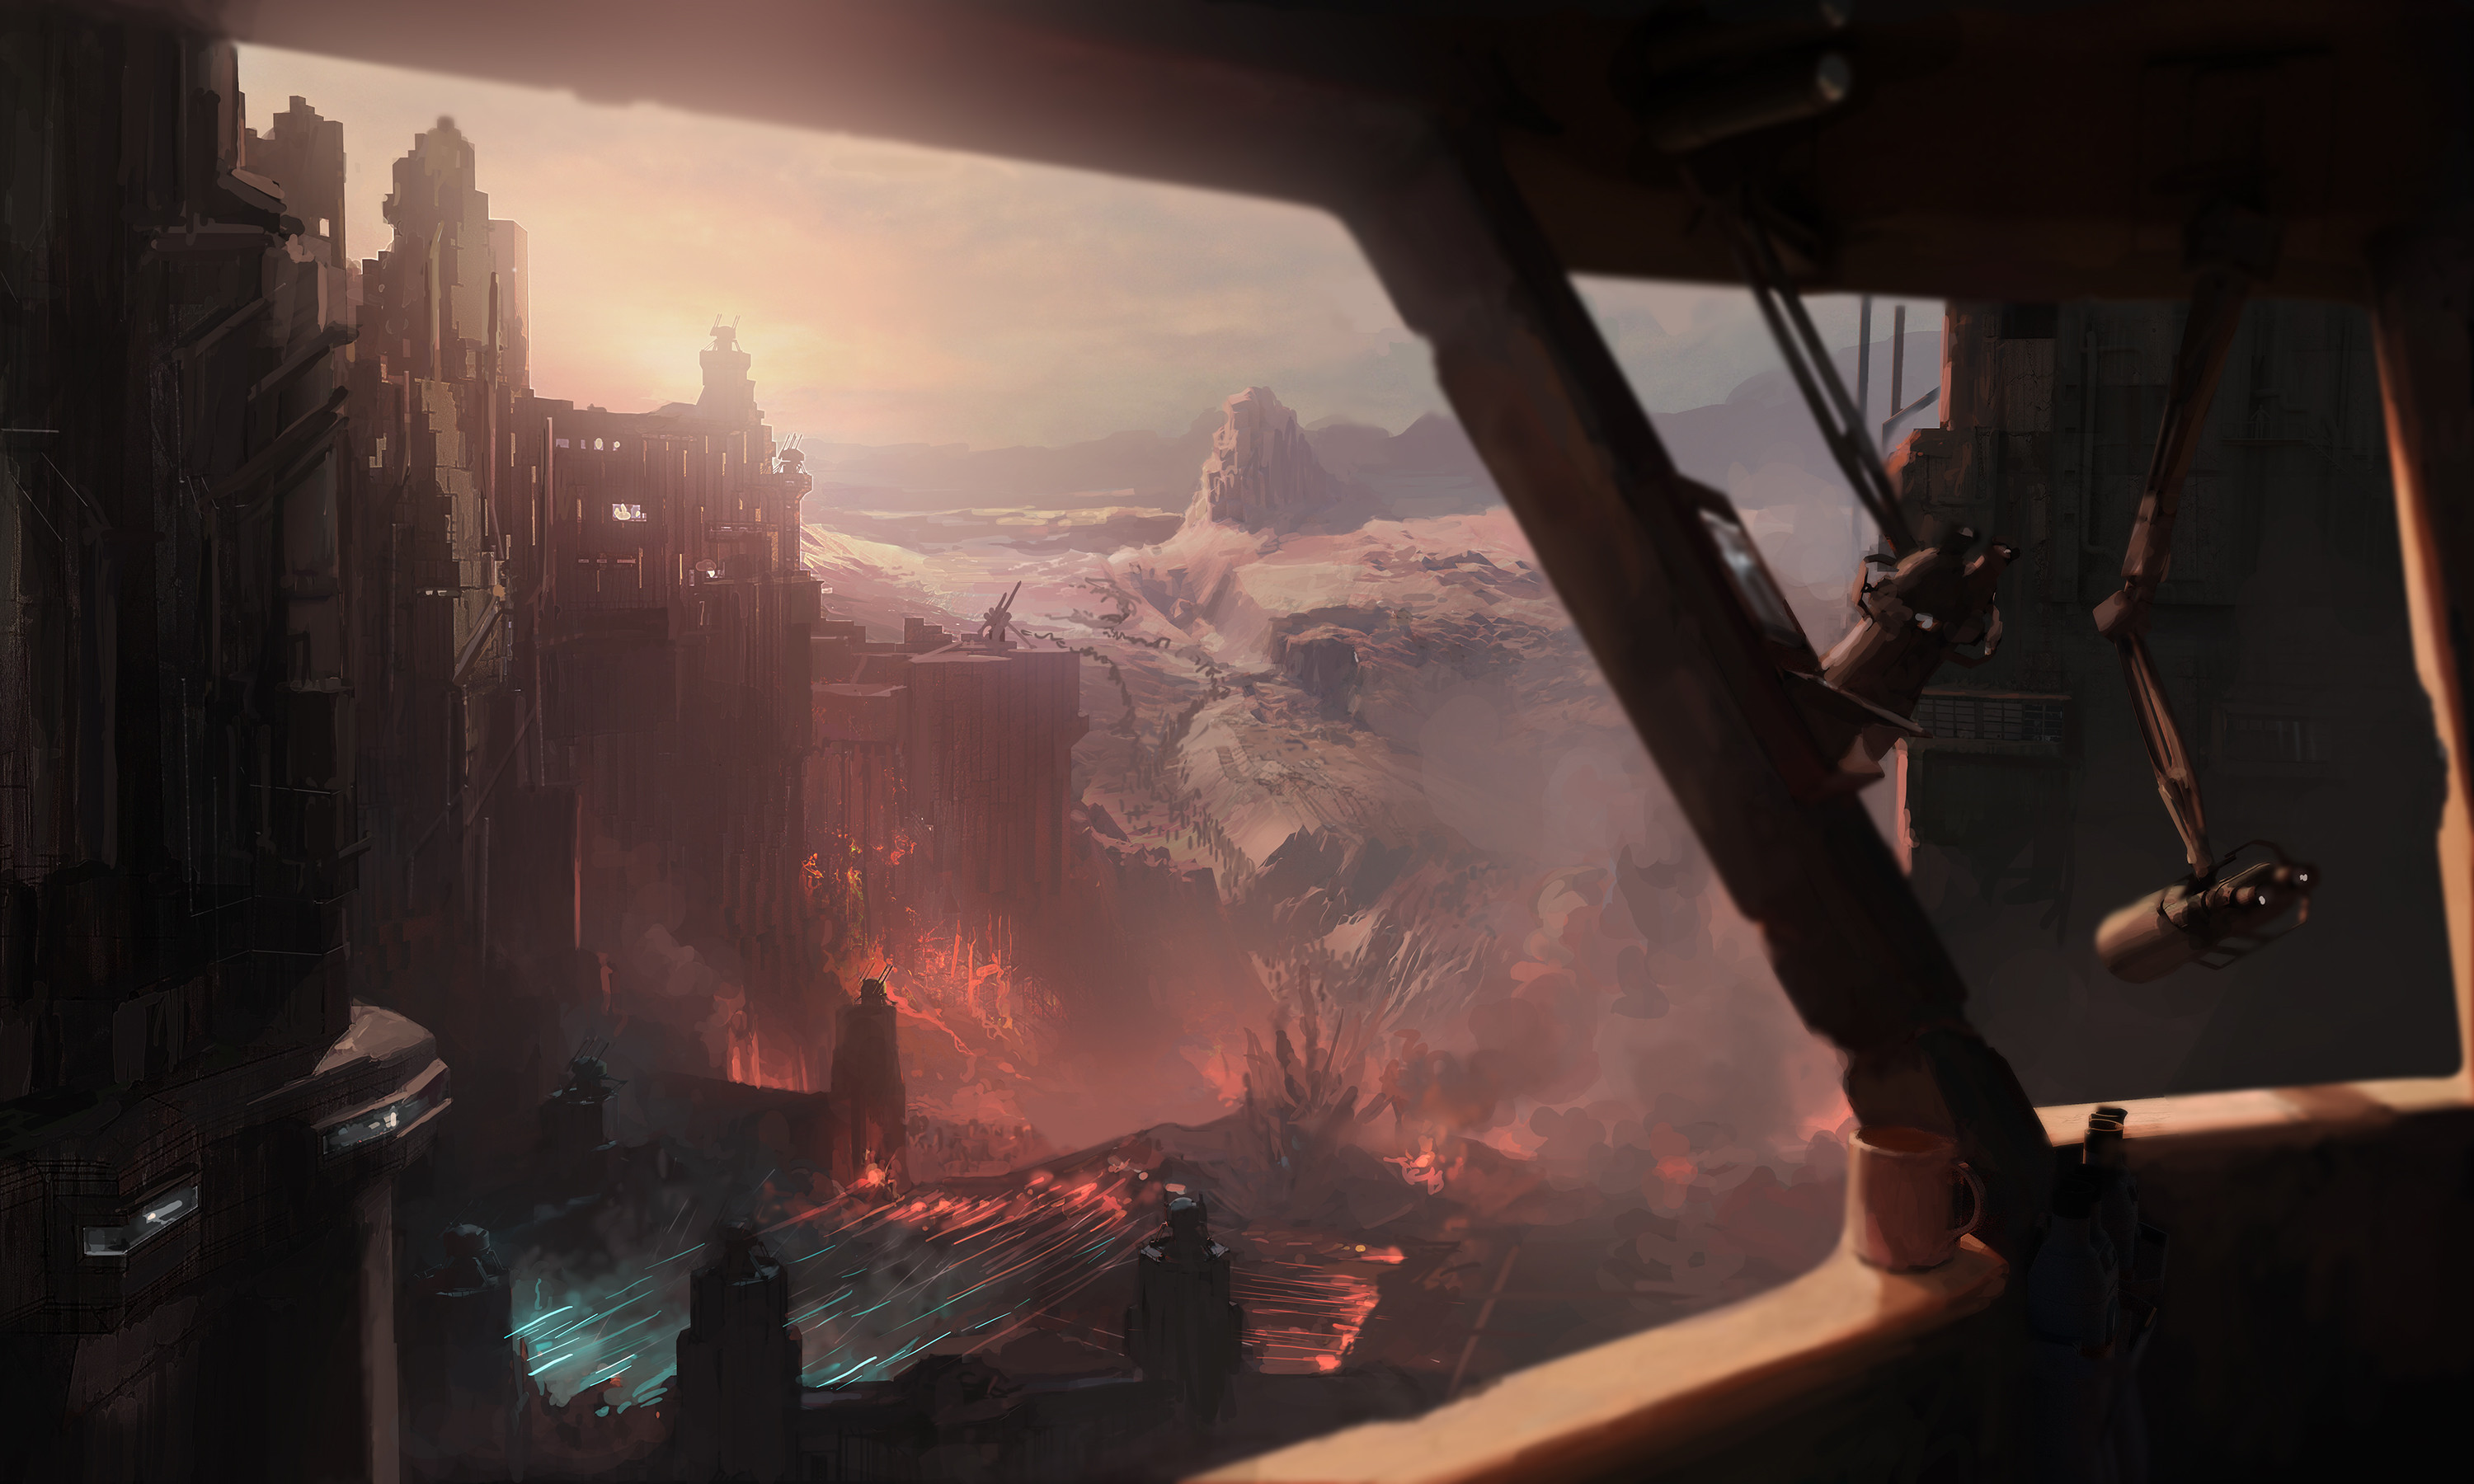 Warhammer Warhammer 40 000 Science Fiction City Ruins Debris Battle Video Games Video Game Art 3000x1800